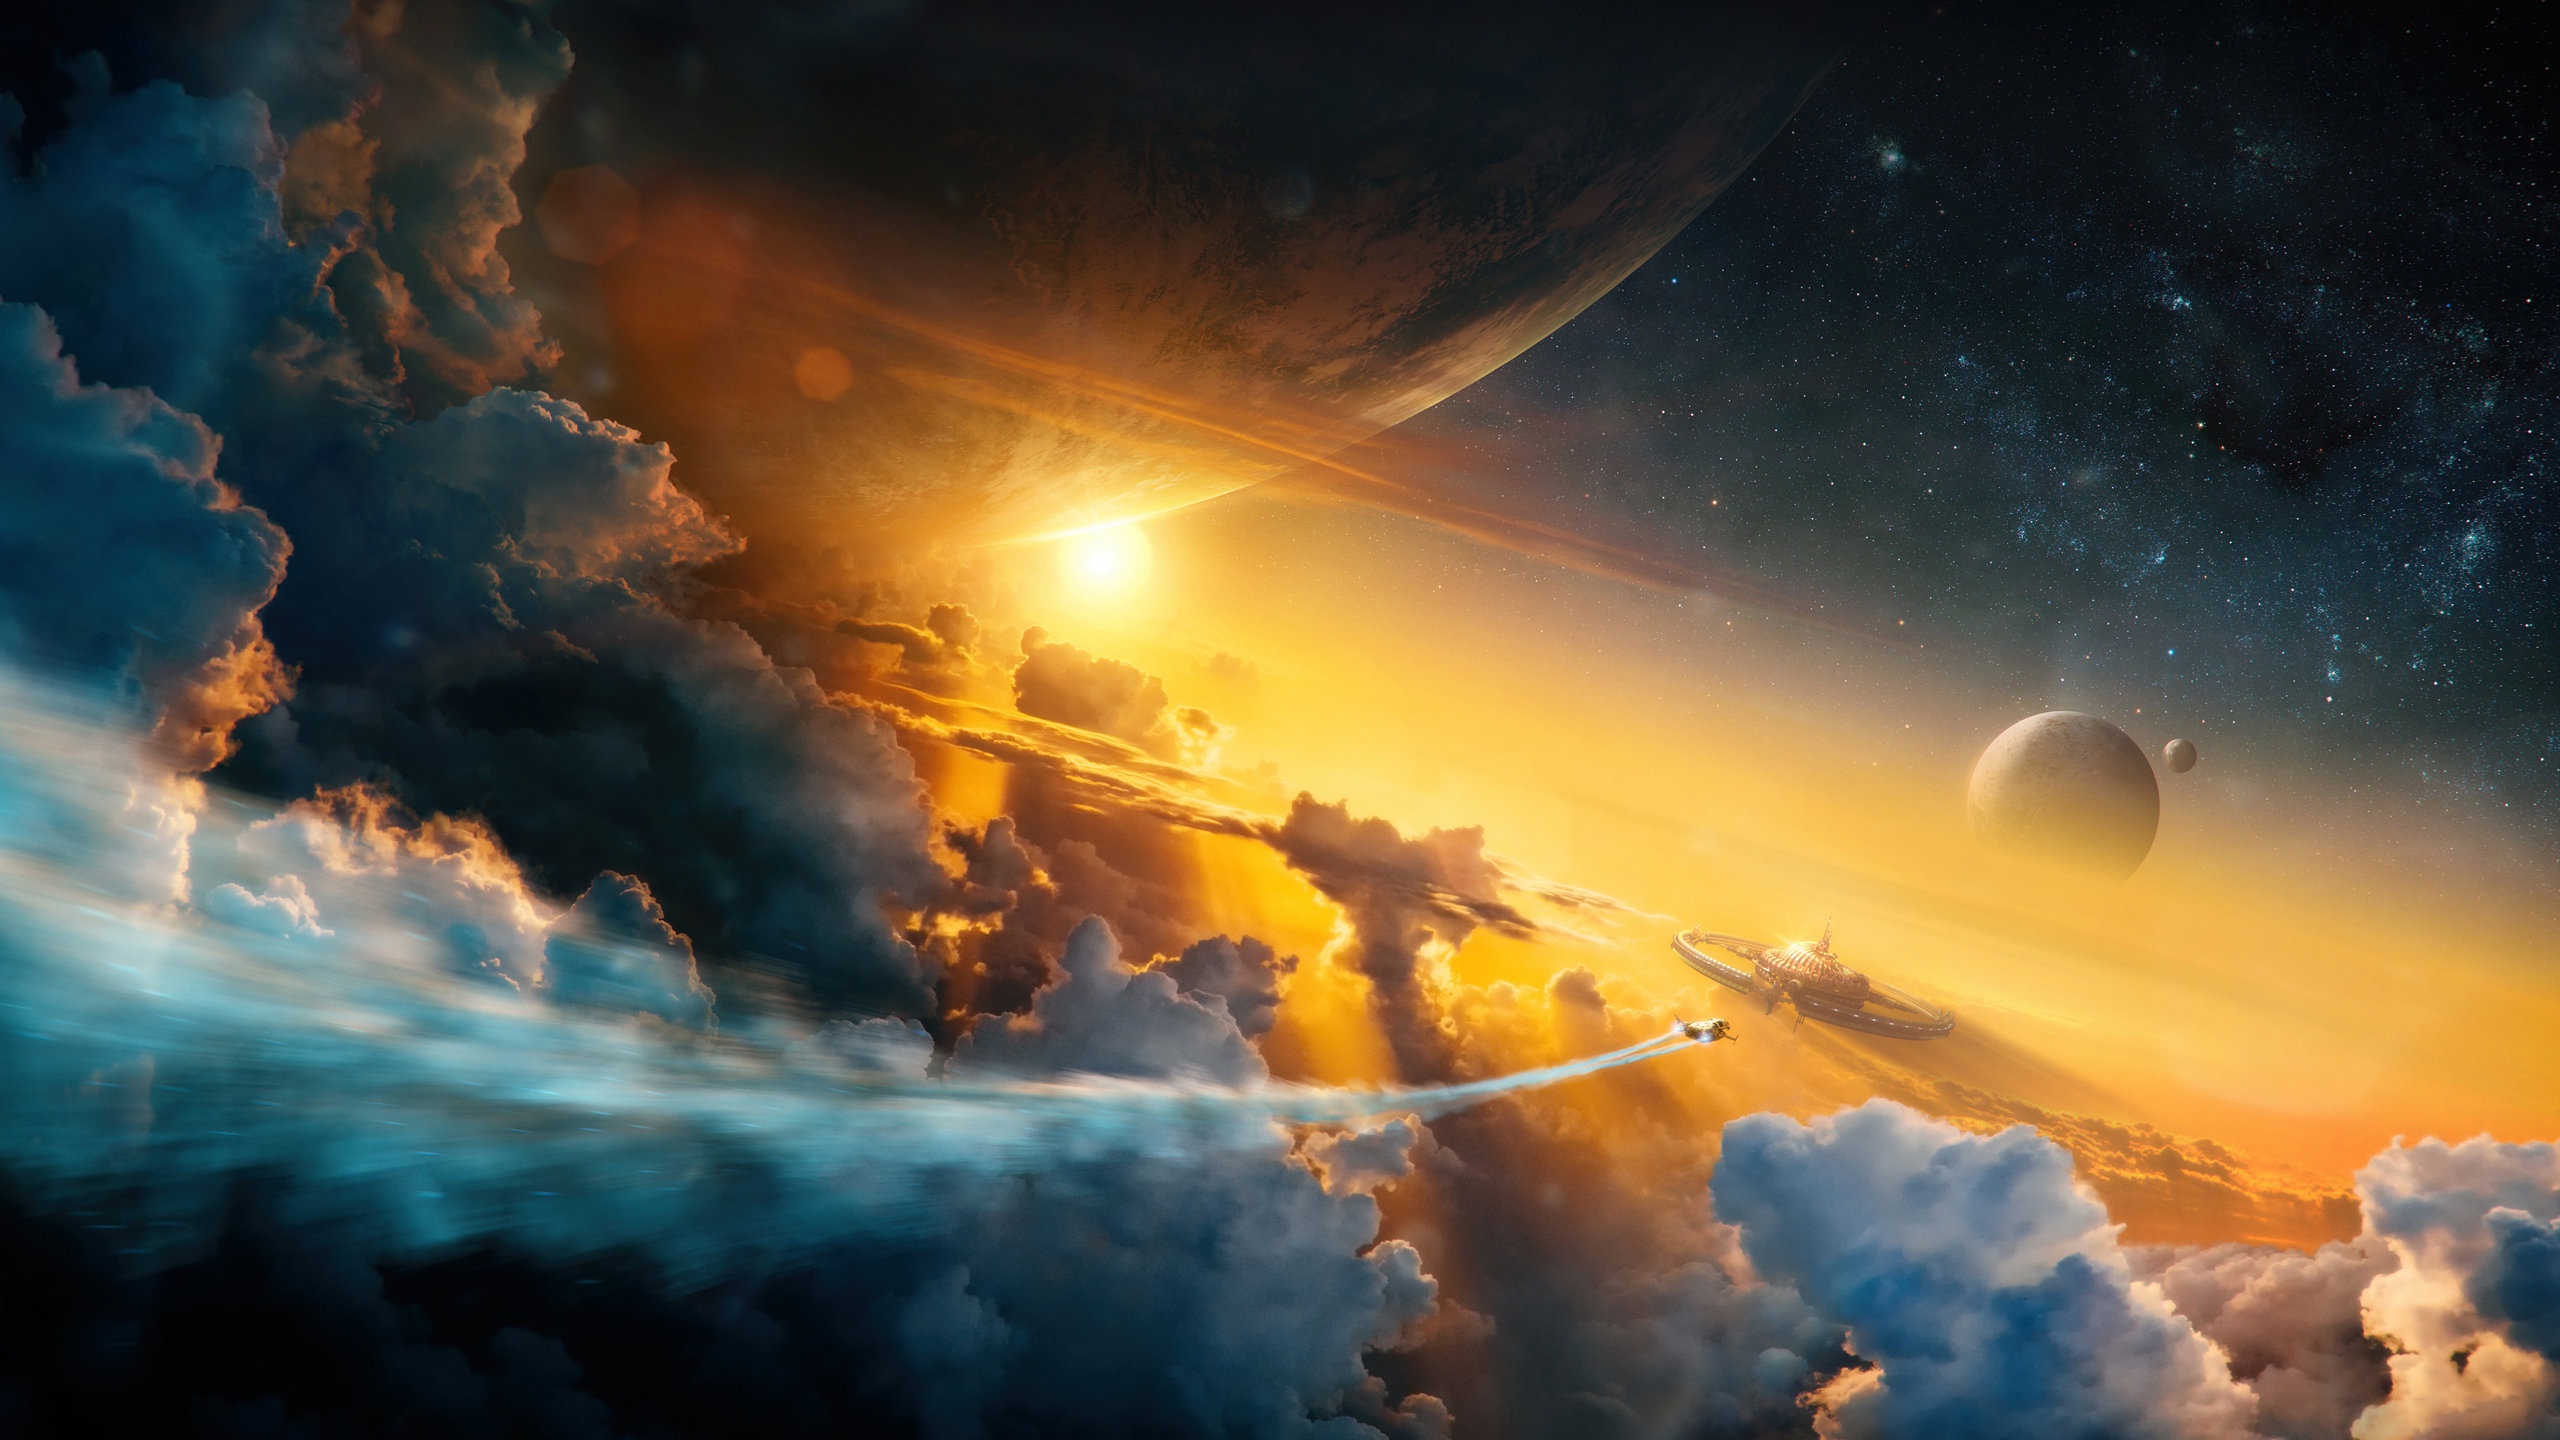 General 2560x1440 science fiction space space art digital art clouds planet sky Sun Taenaron